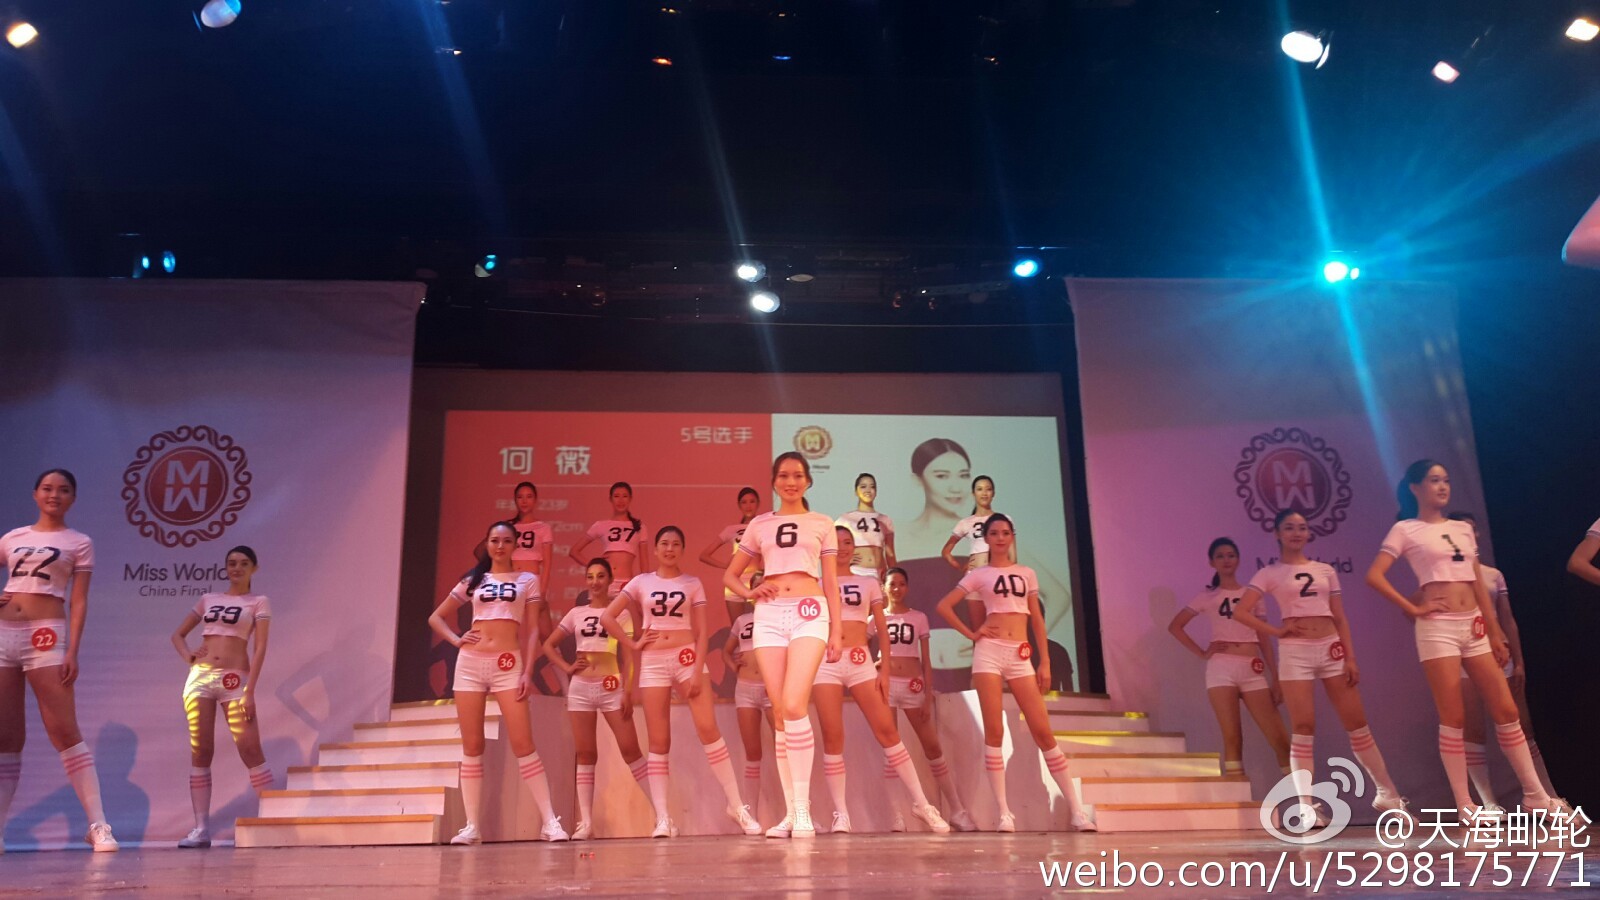 2015 | Miss World China | Final 12/11 - Page 5 005MyBxVgw1exyed7w8g3j318g0p0dlz